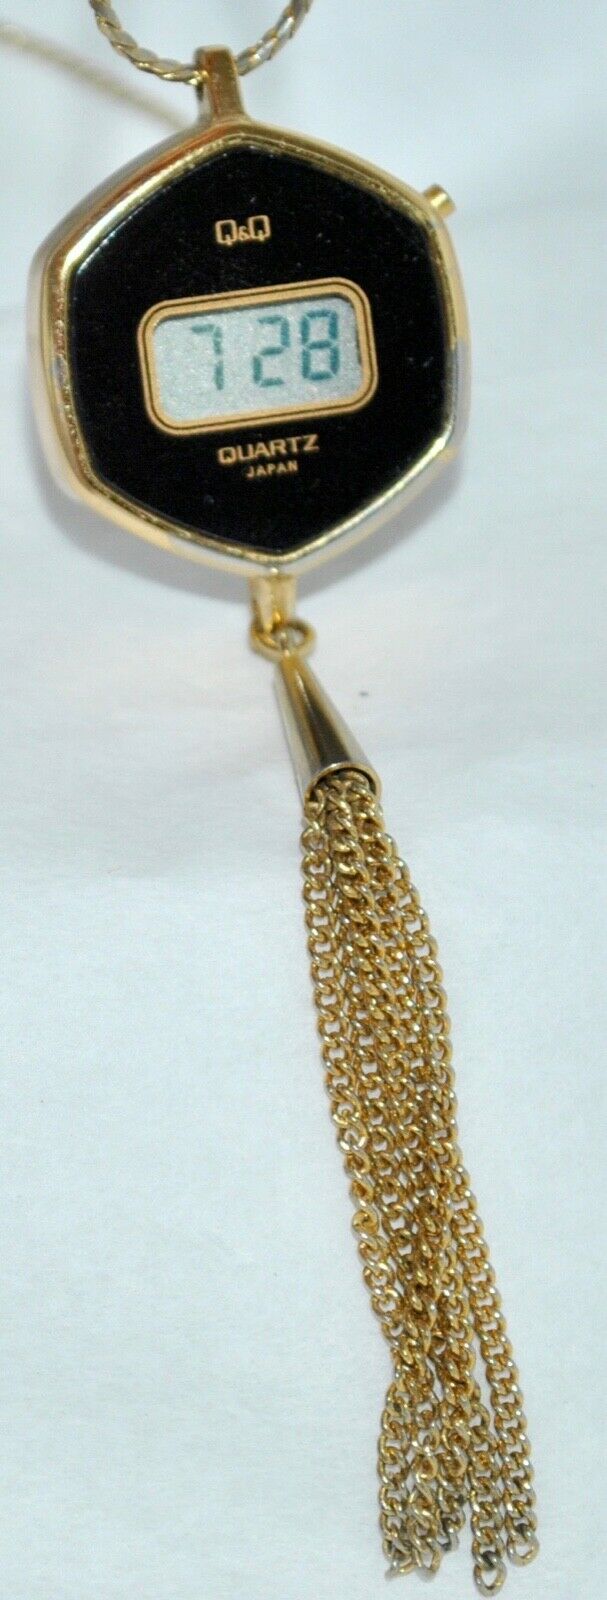 Vintage Q & Q Digital LCD Pendant Necklace Watch Hanging Chain Tassel Black Dial